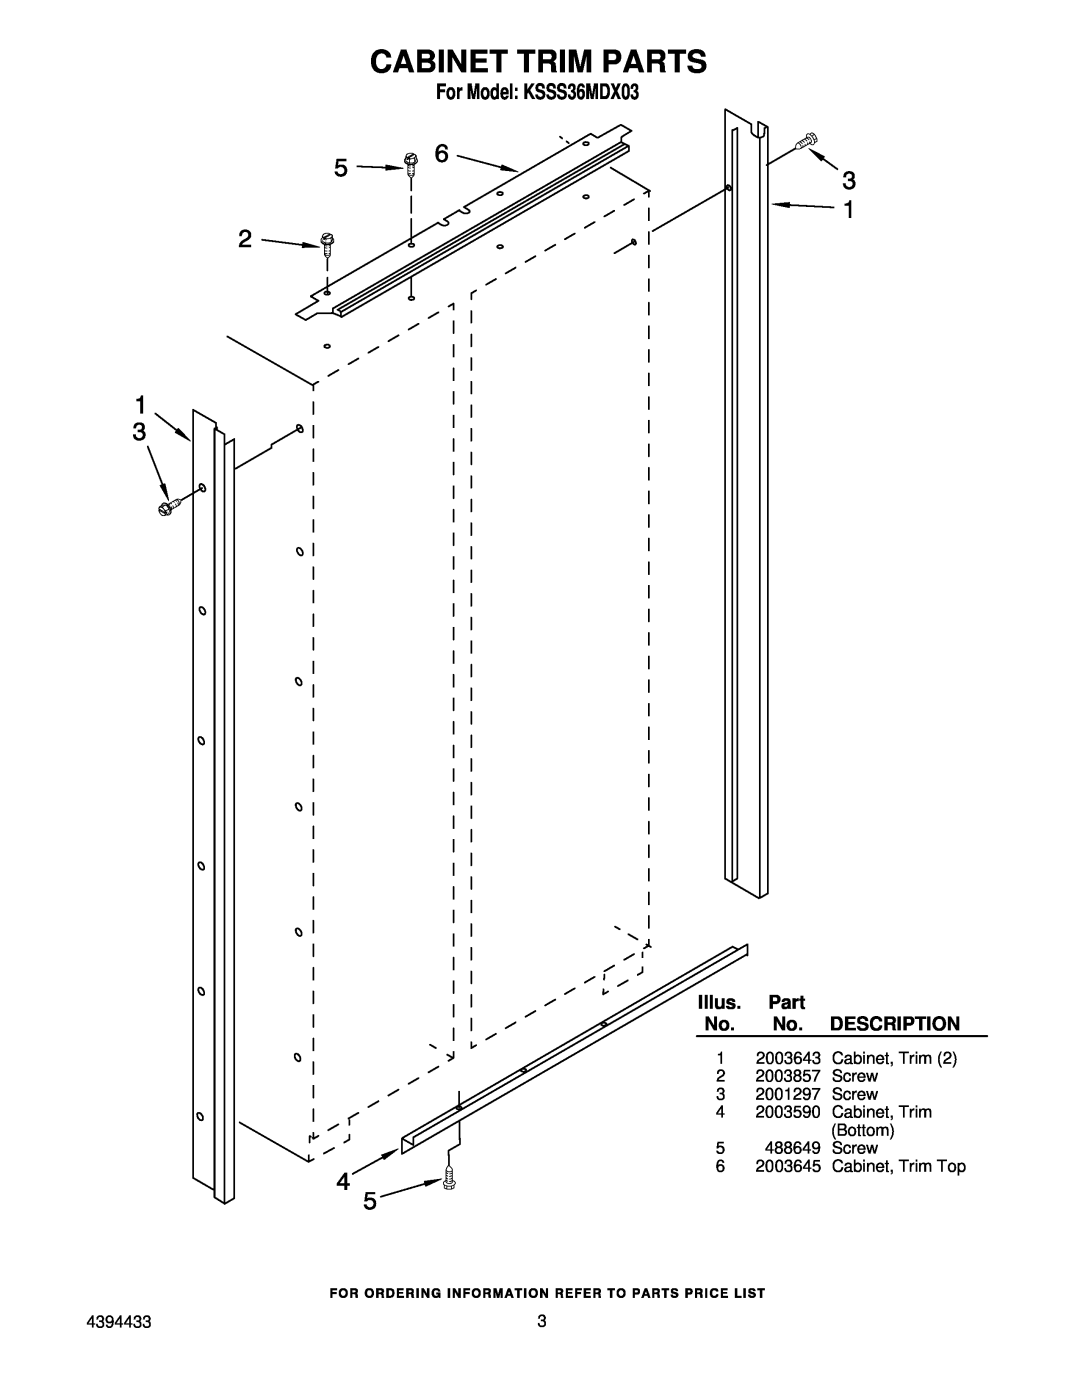 KitchenAid manual Cabinet Trim Parts, Illus, Description, For Model KSSS36MDX03 